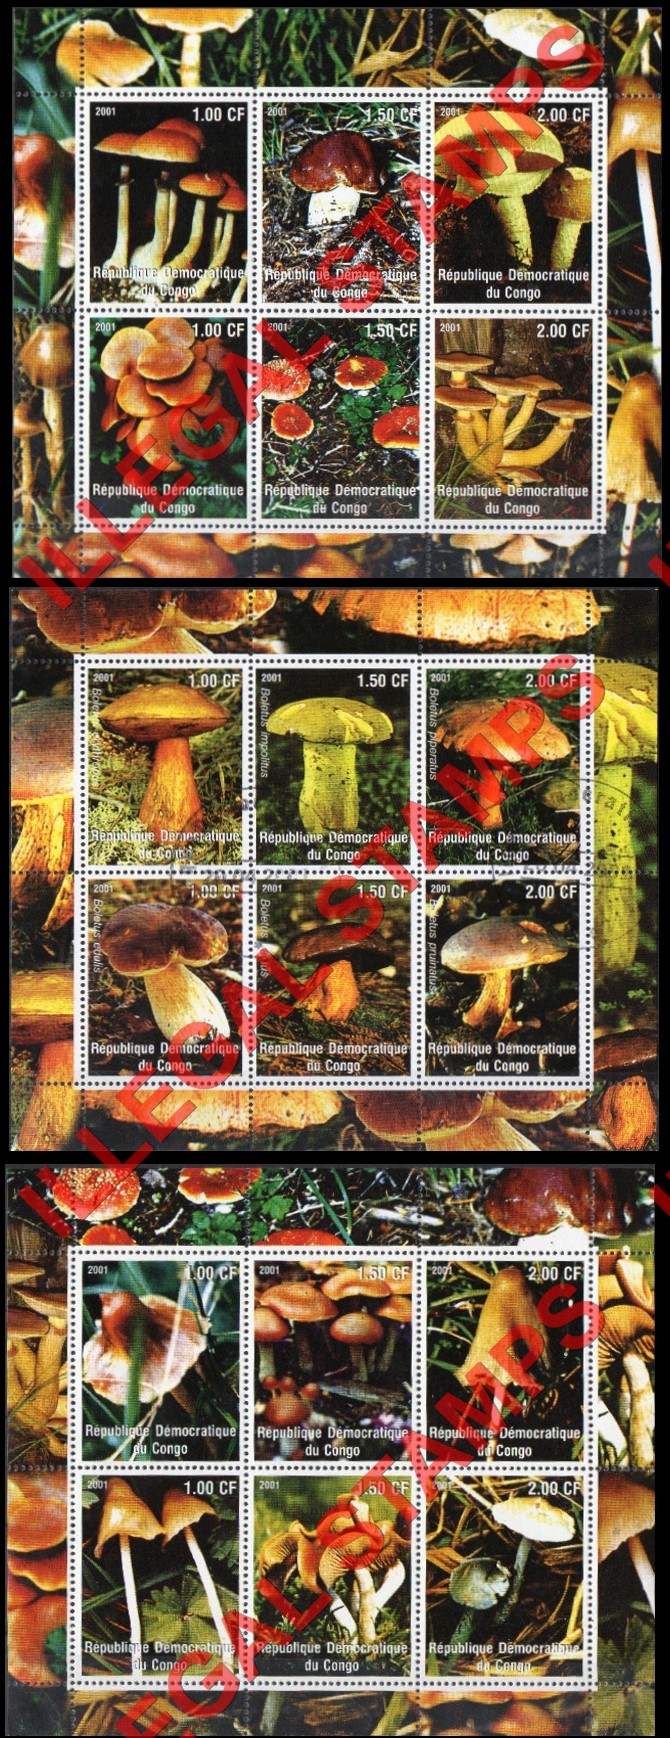 Congo Democratic Republic 2001 Mushrooms Illegal Stamp Souvenir Sheets of 6